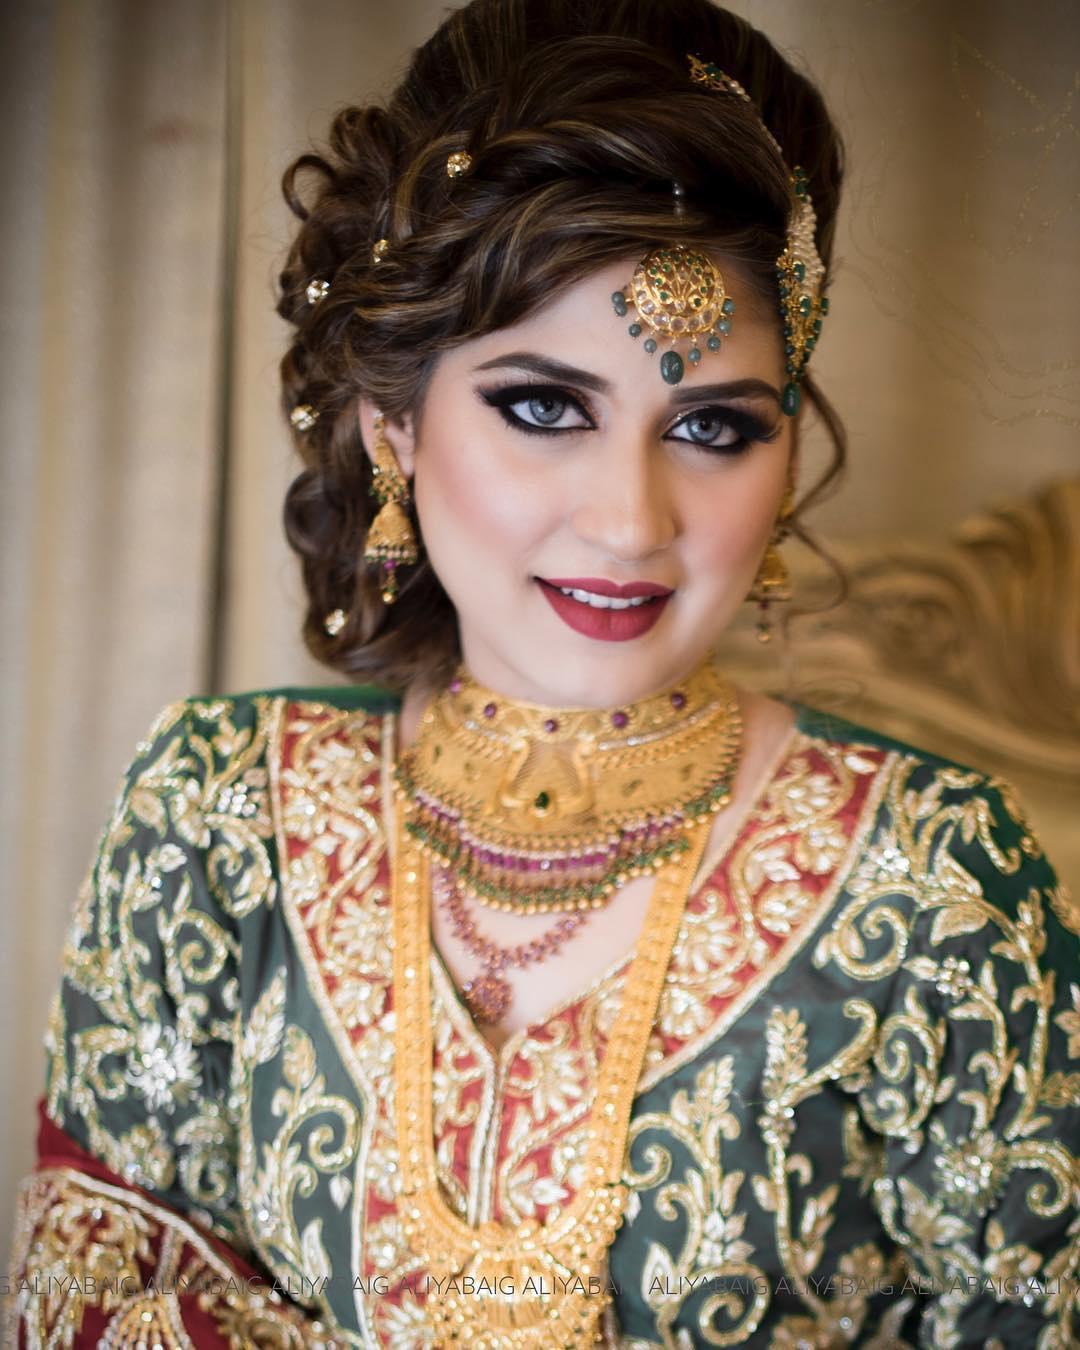 Make-up Artist by Siyaa Mehendi And Makeup Artist | Bridestory.com